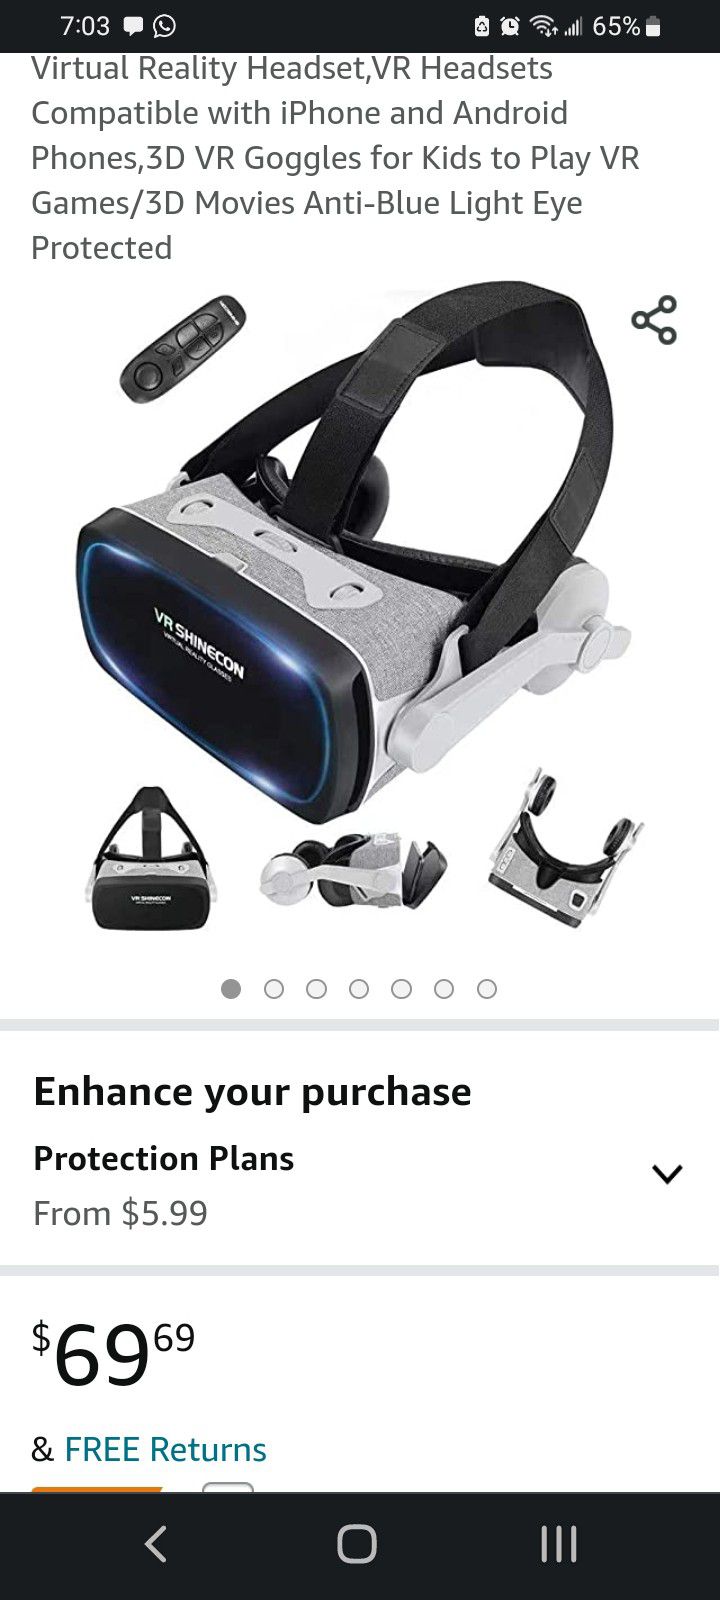 VR-Shinecon